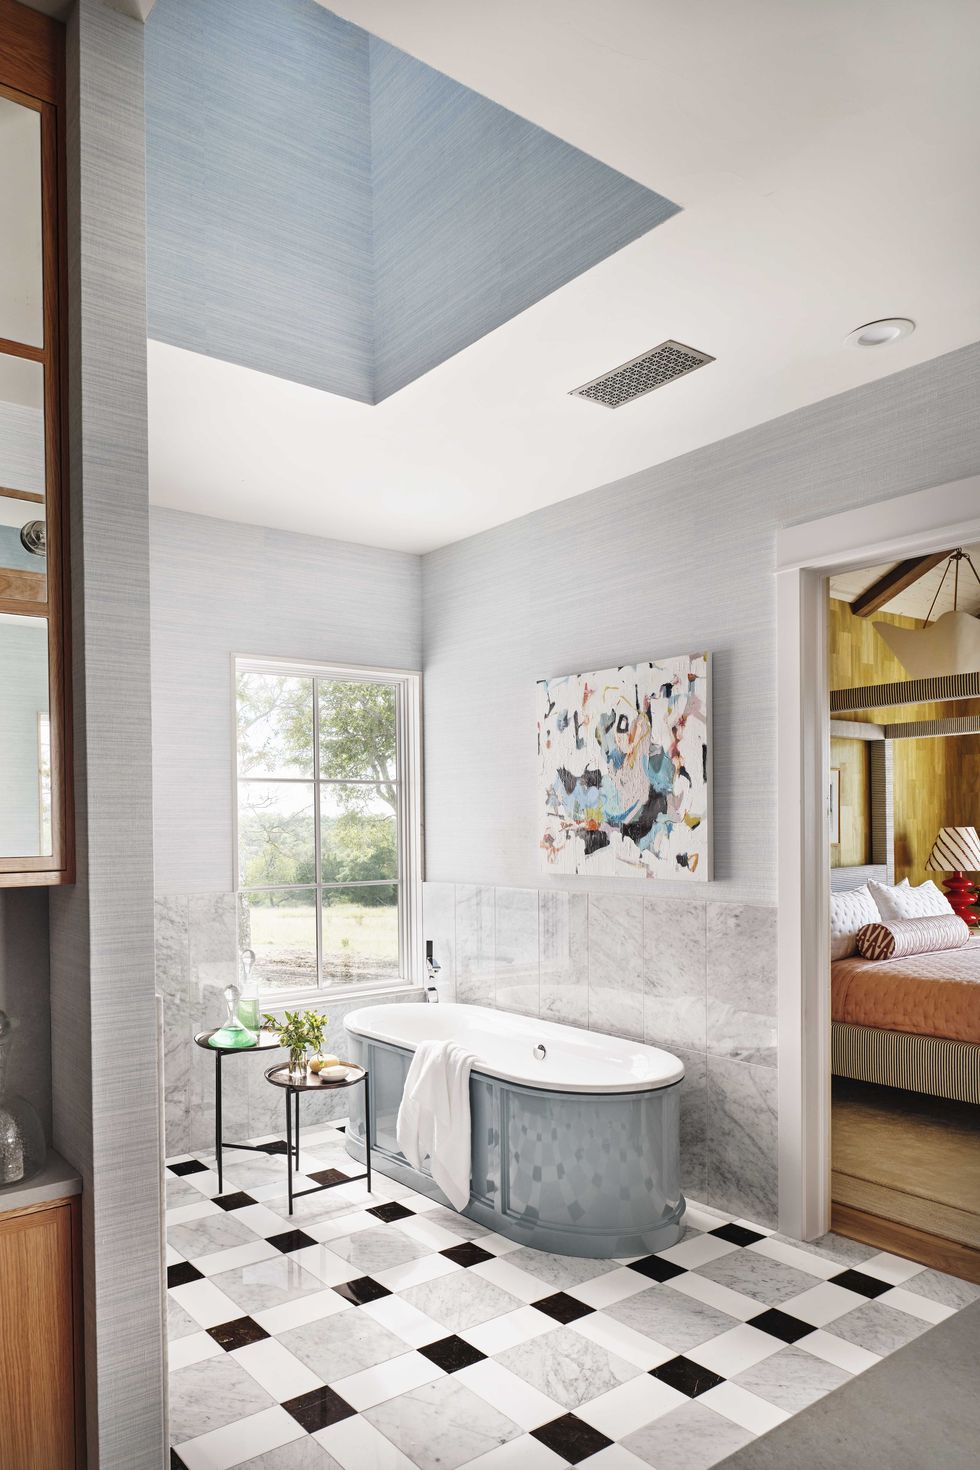 black, white and gray tiles, bath tub, square wall tiles, wall art